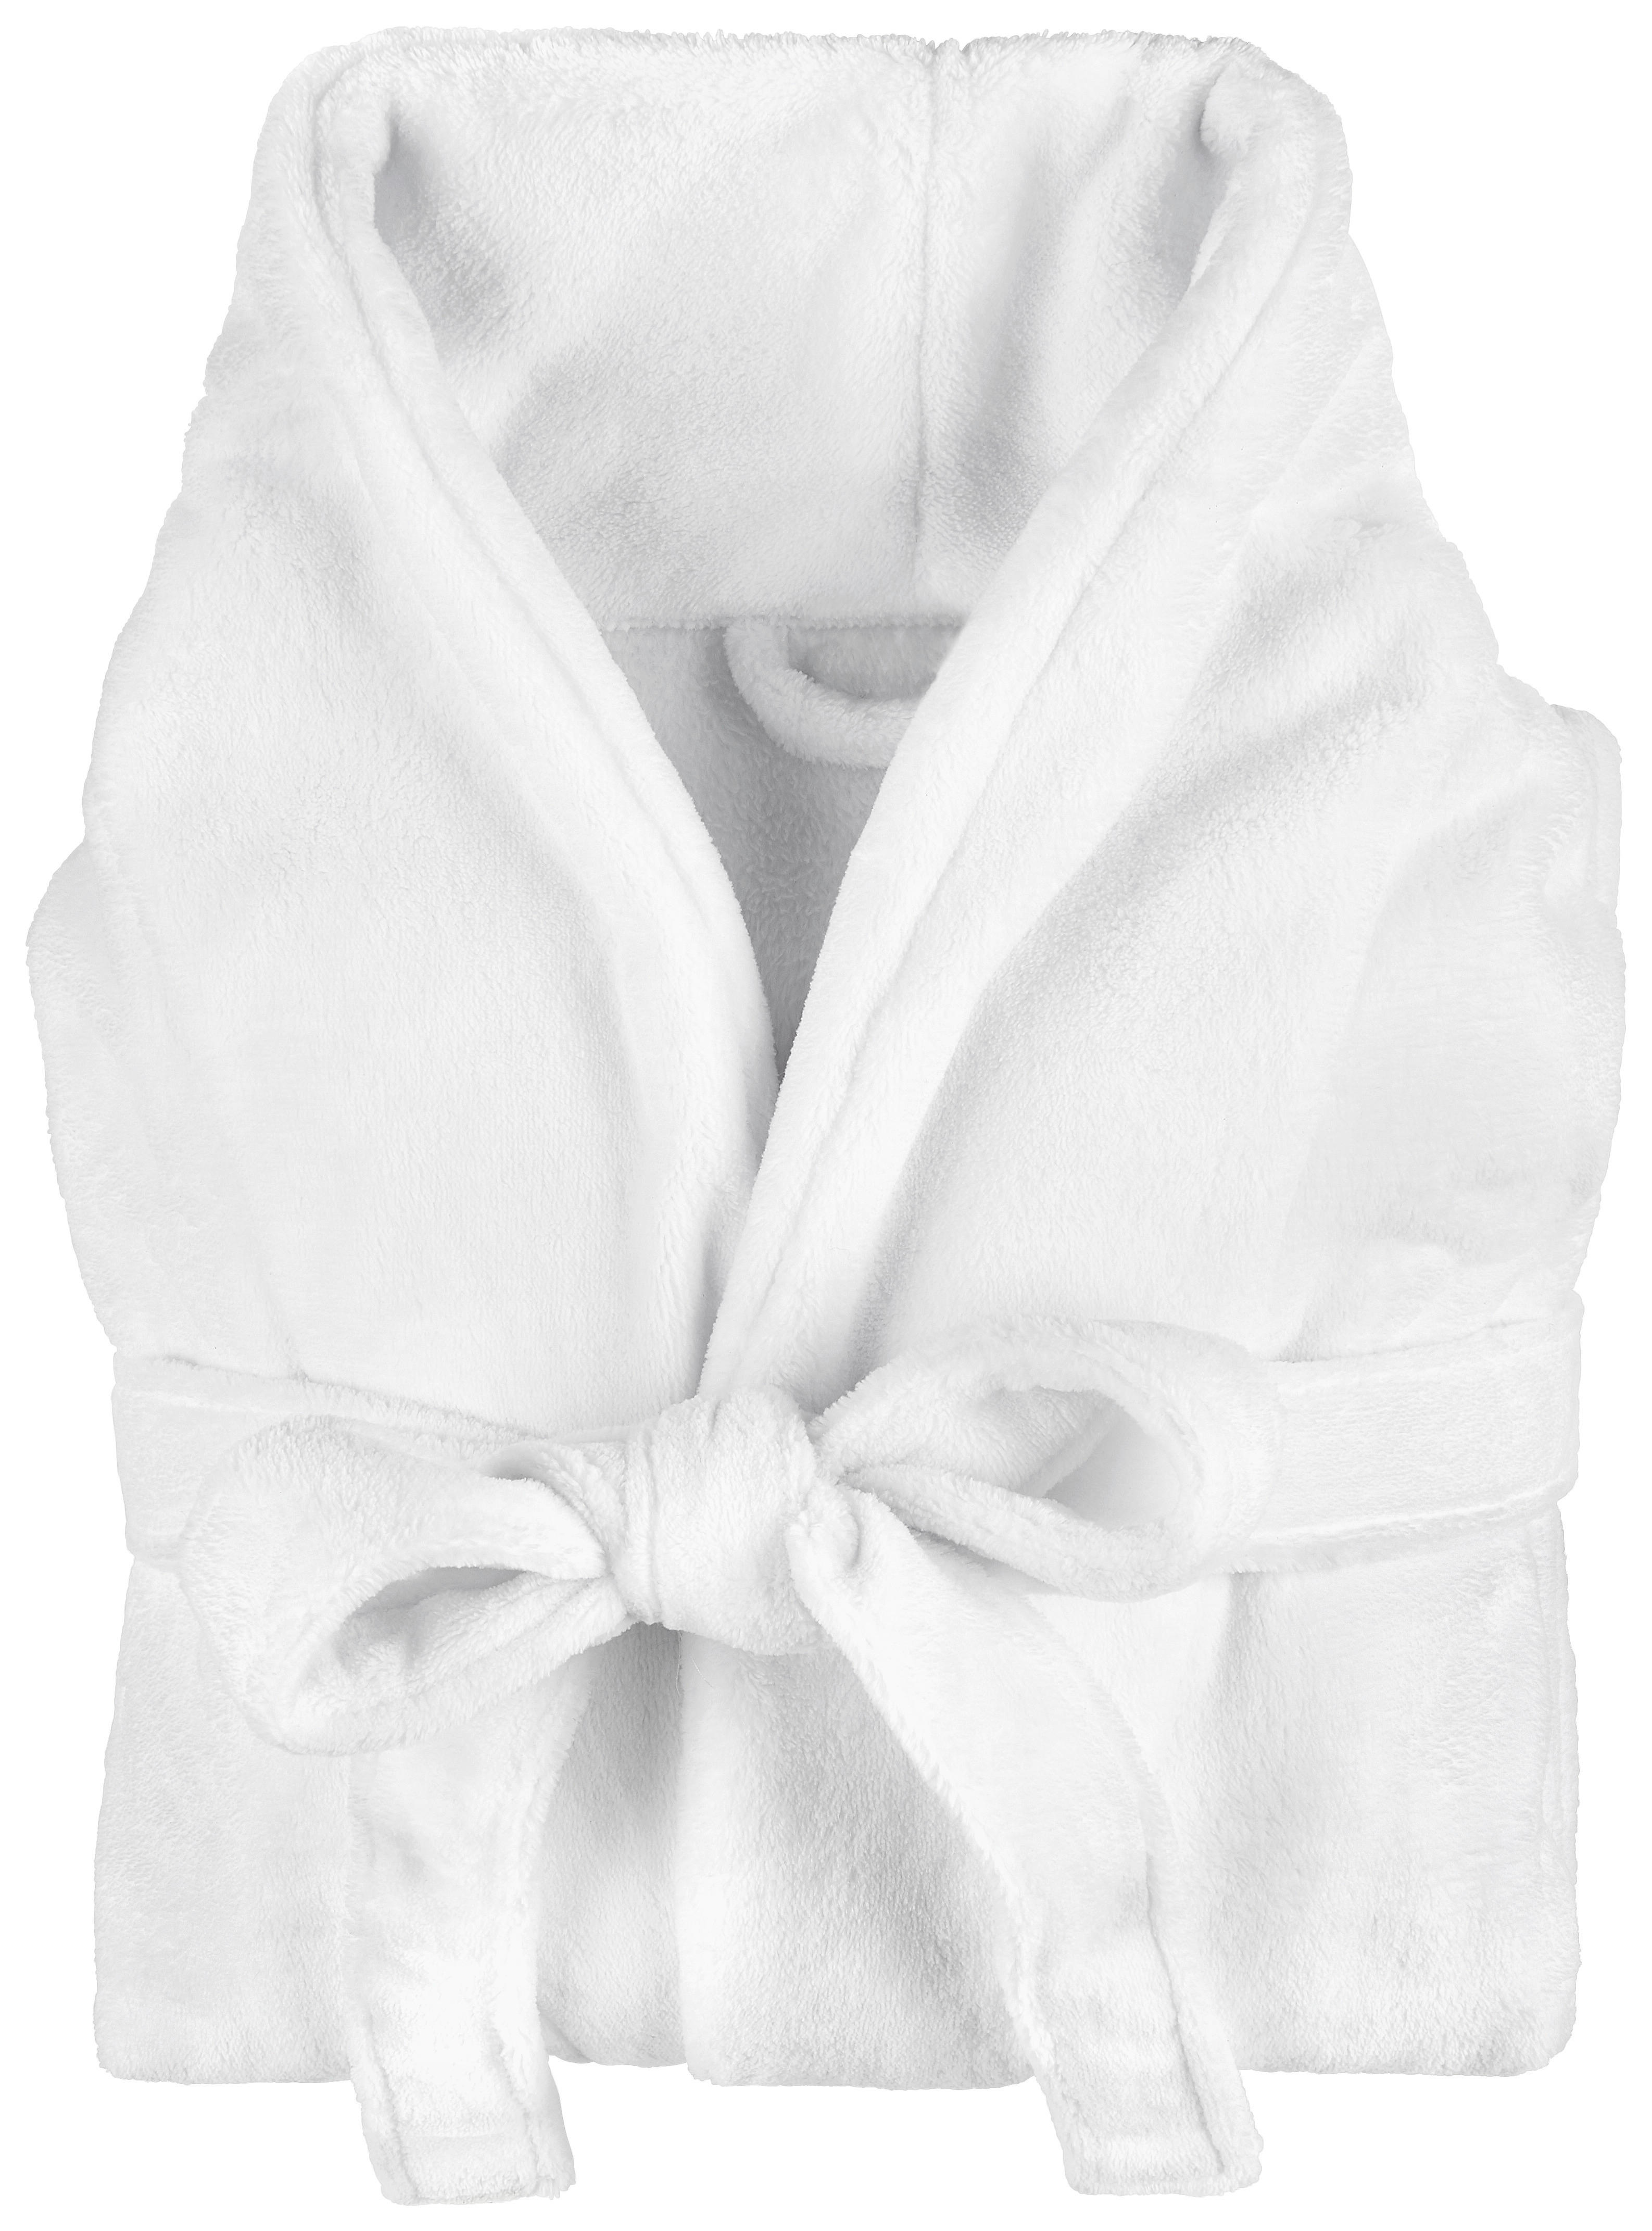 ŽUPAN UNISEX - biela, Konventionell, textil (Mnull) - Boxxx